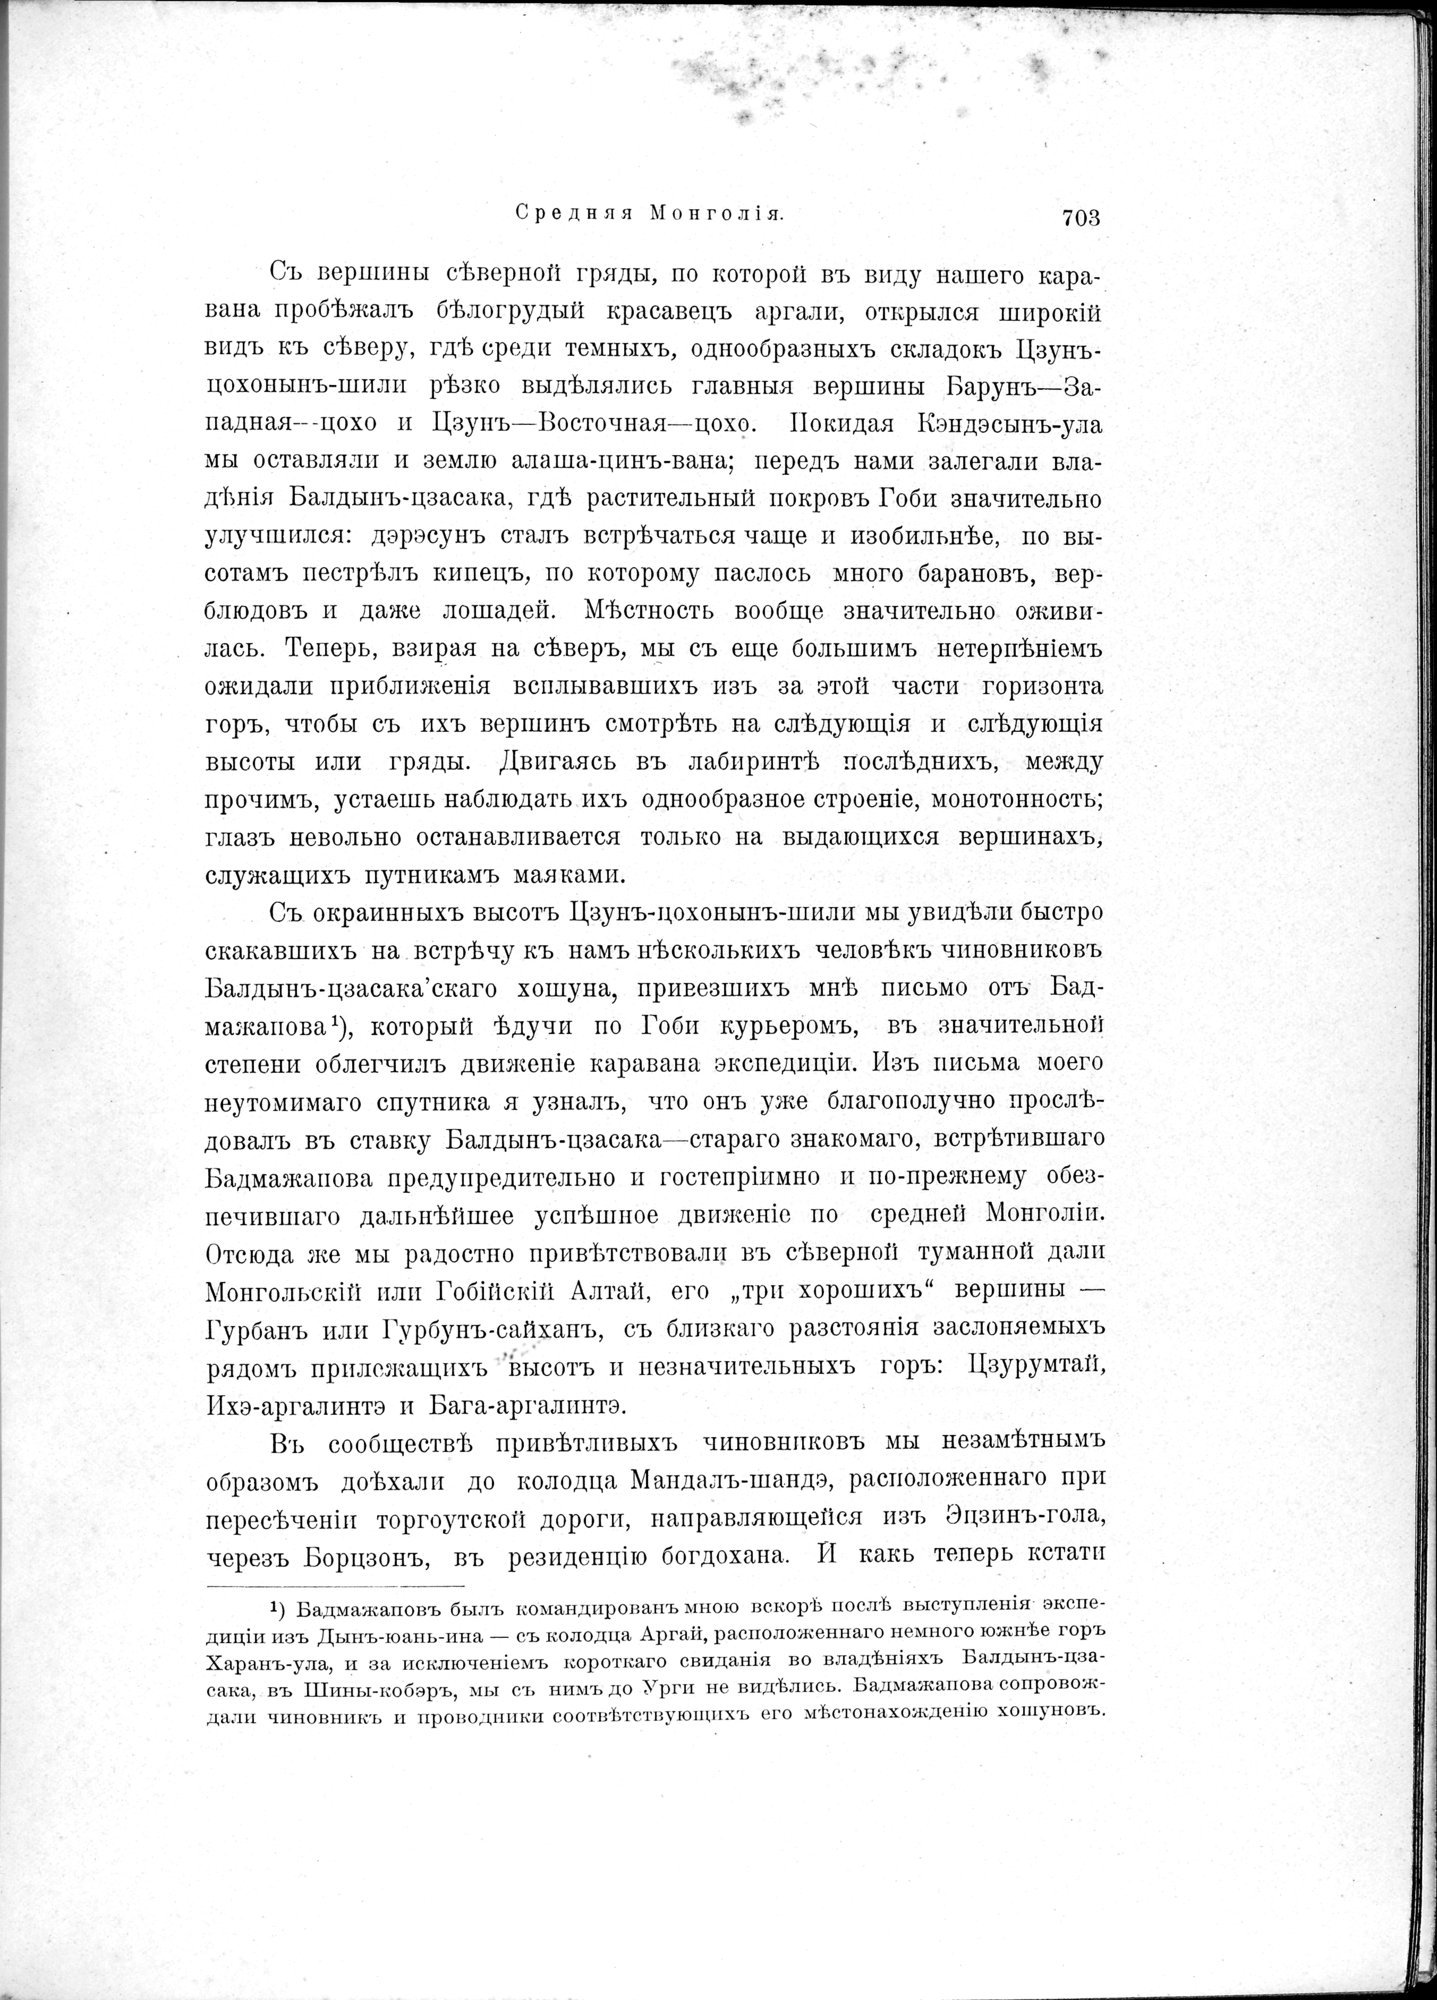 Mongoliia i Kam : vol.2 / Page 541 (Grayscale High Resolution Image)